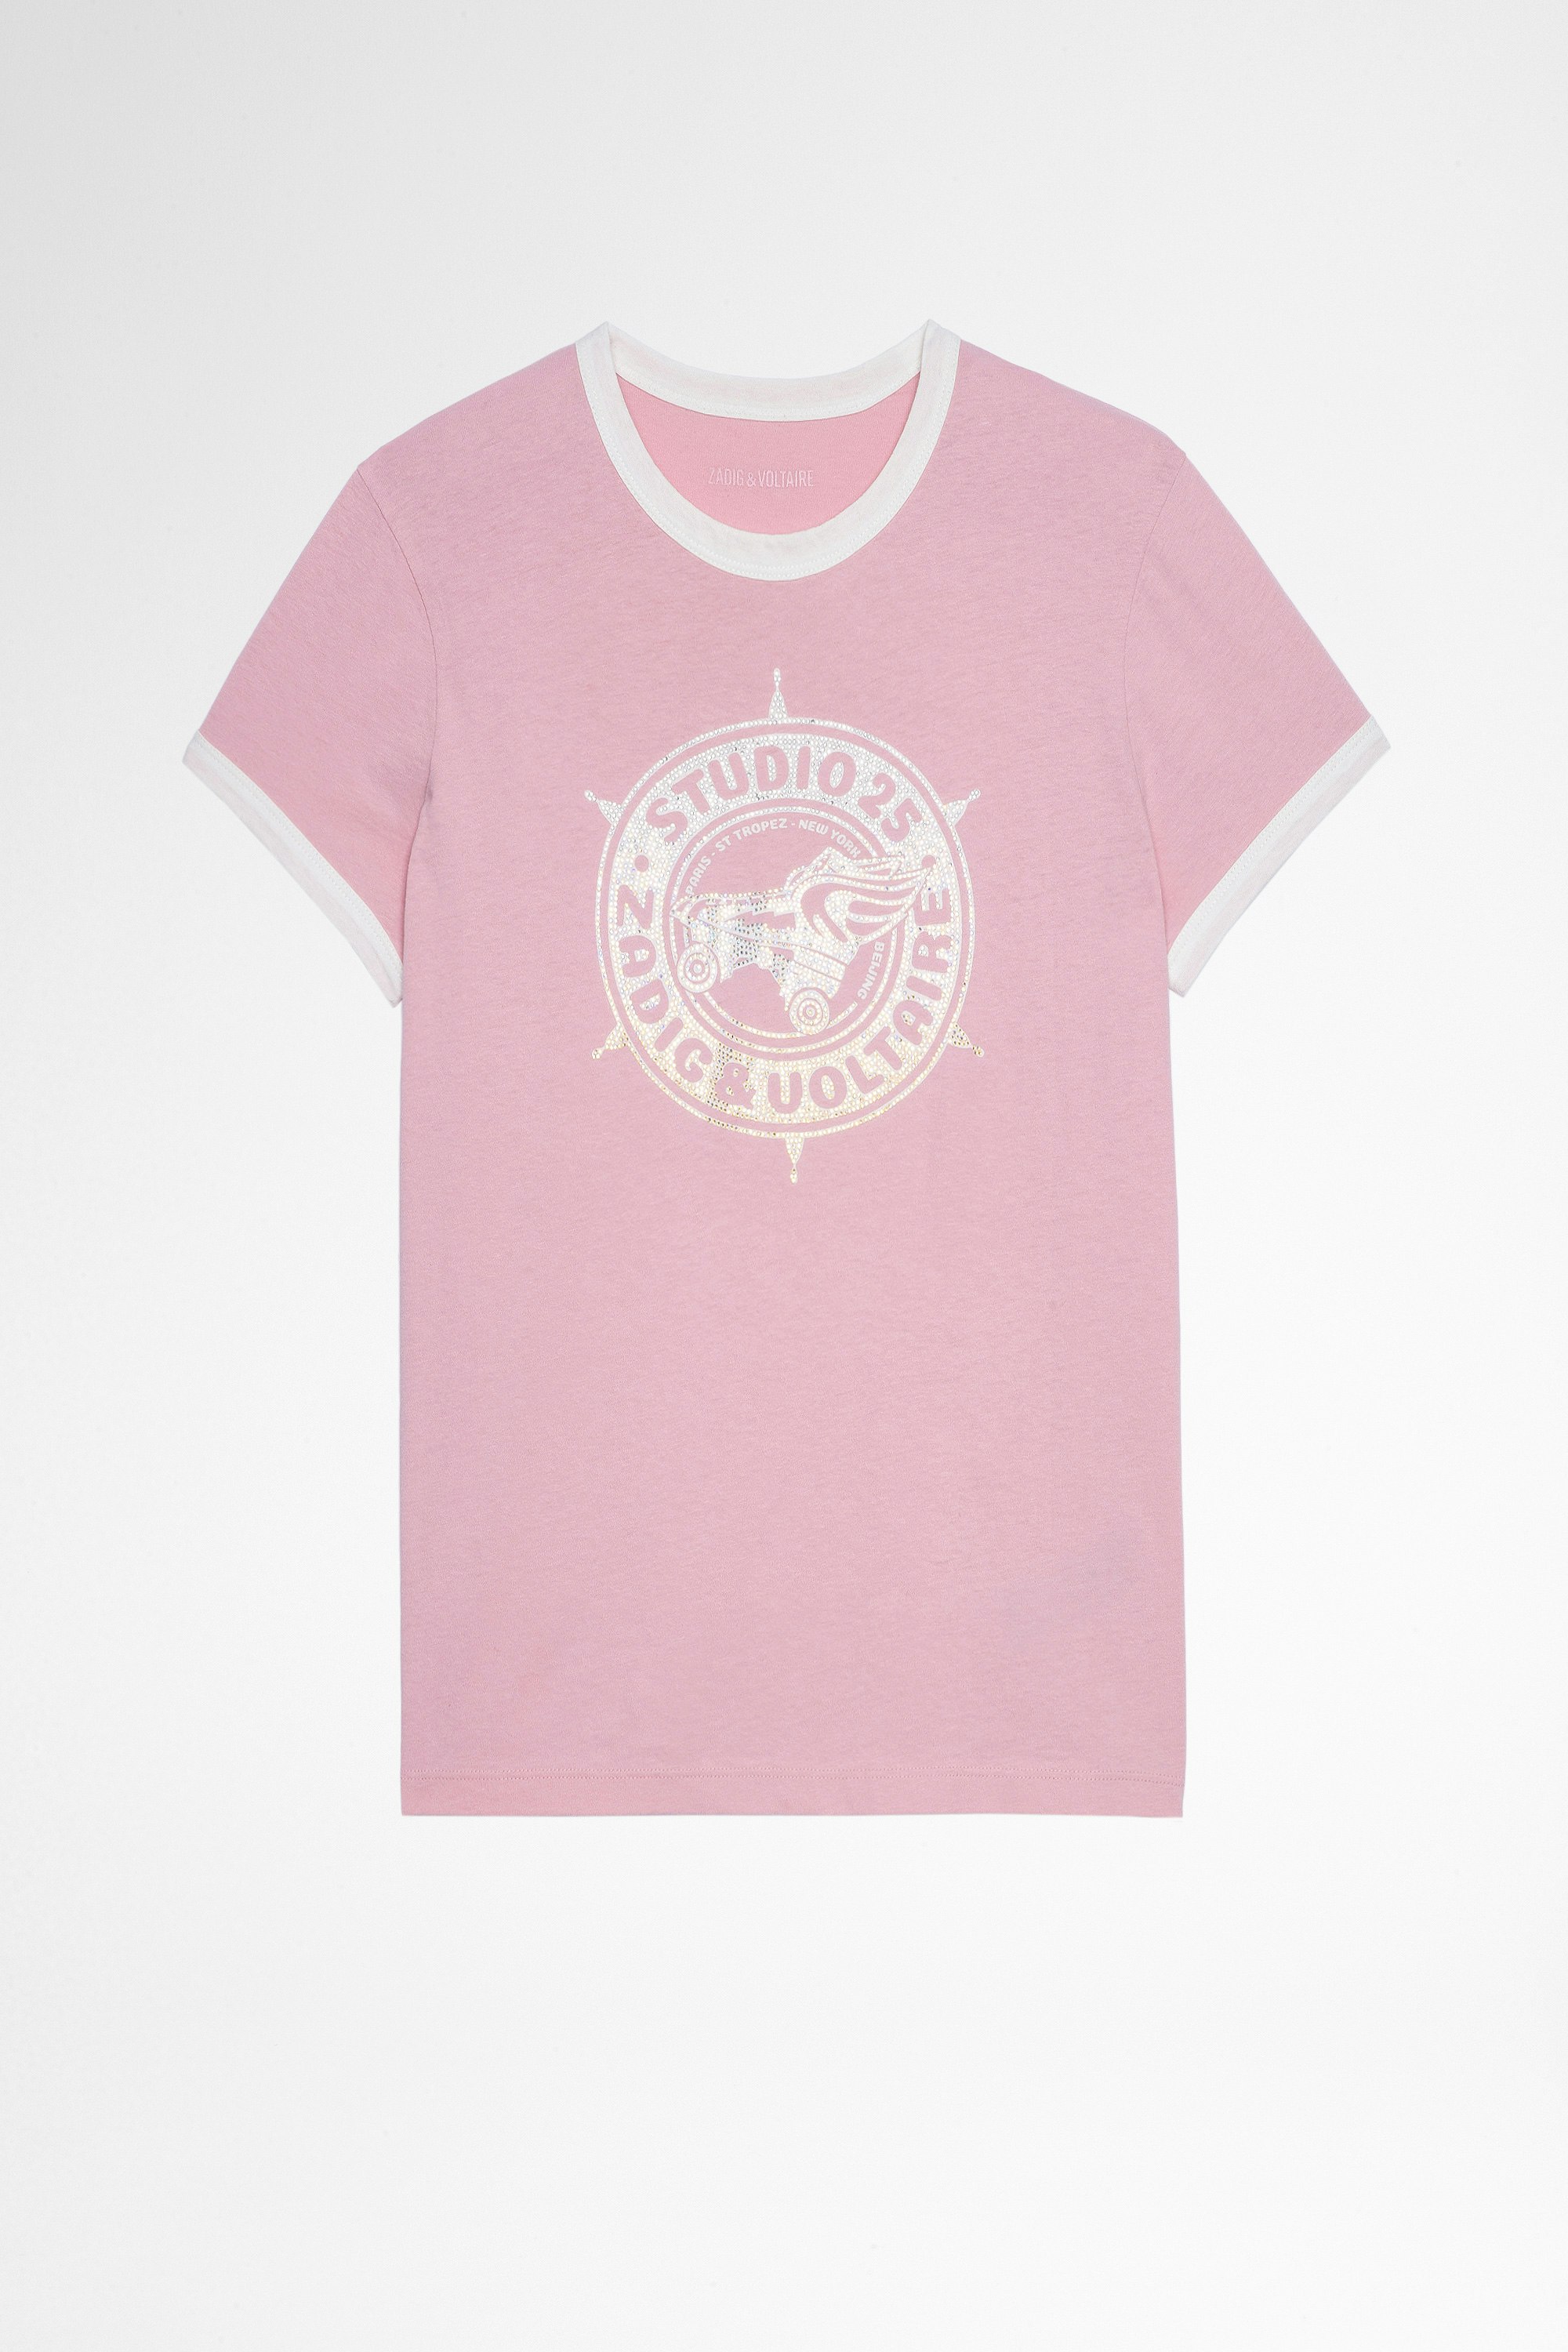 Zoe Studio 25 Ｔシャツ Studio 25 pink cotton t-shirt with Studio 25 print covered in crystals